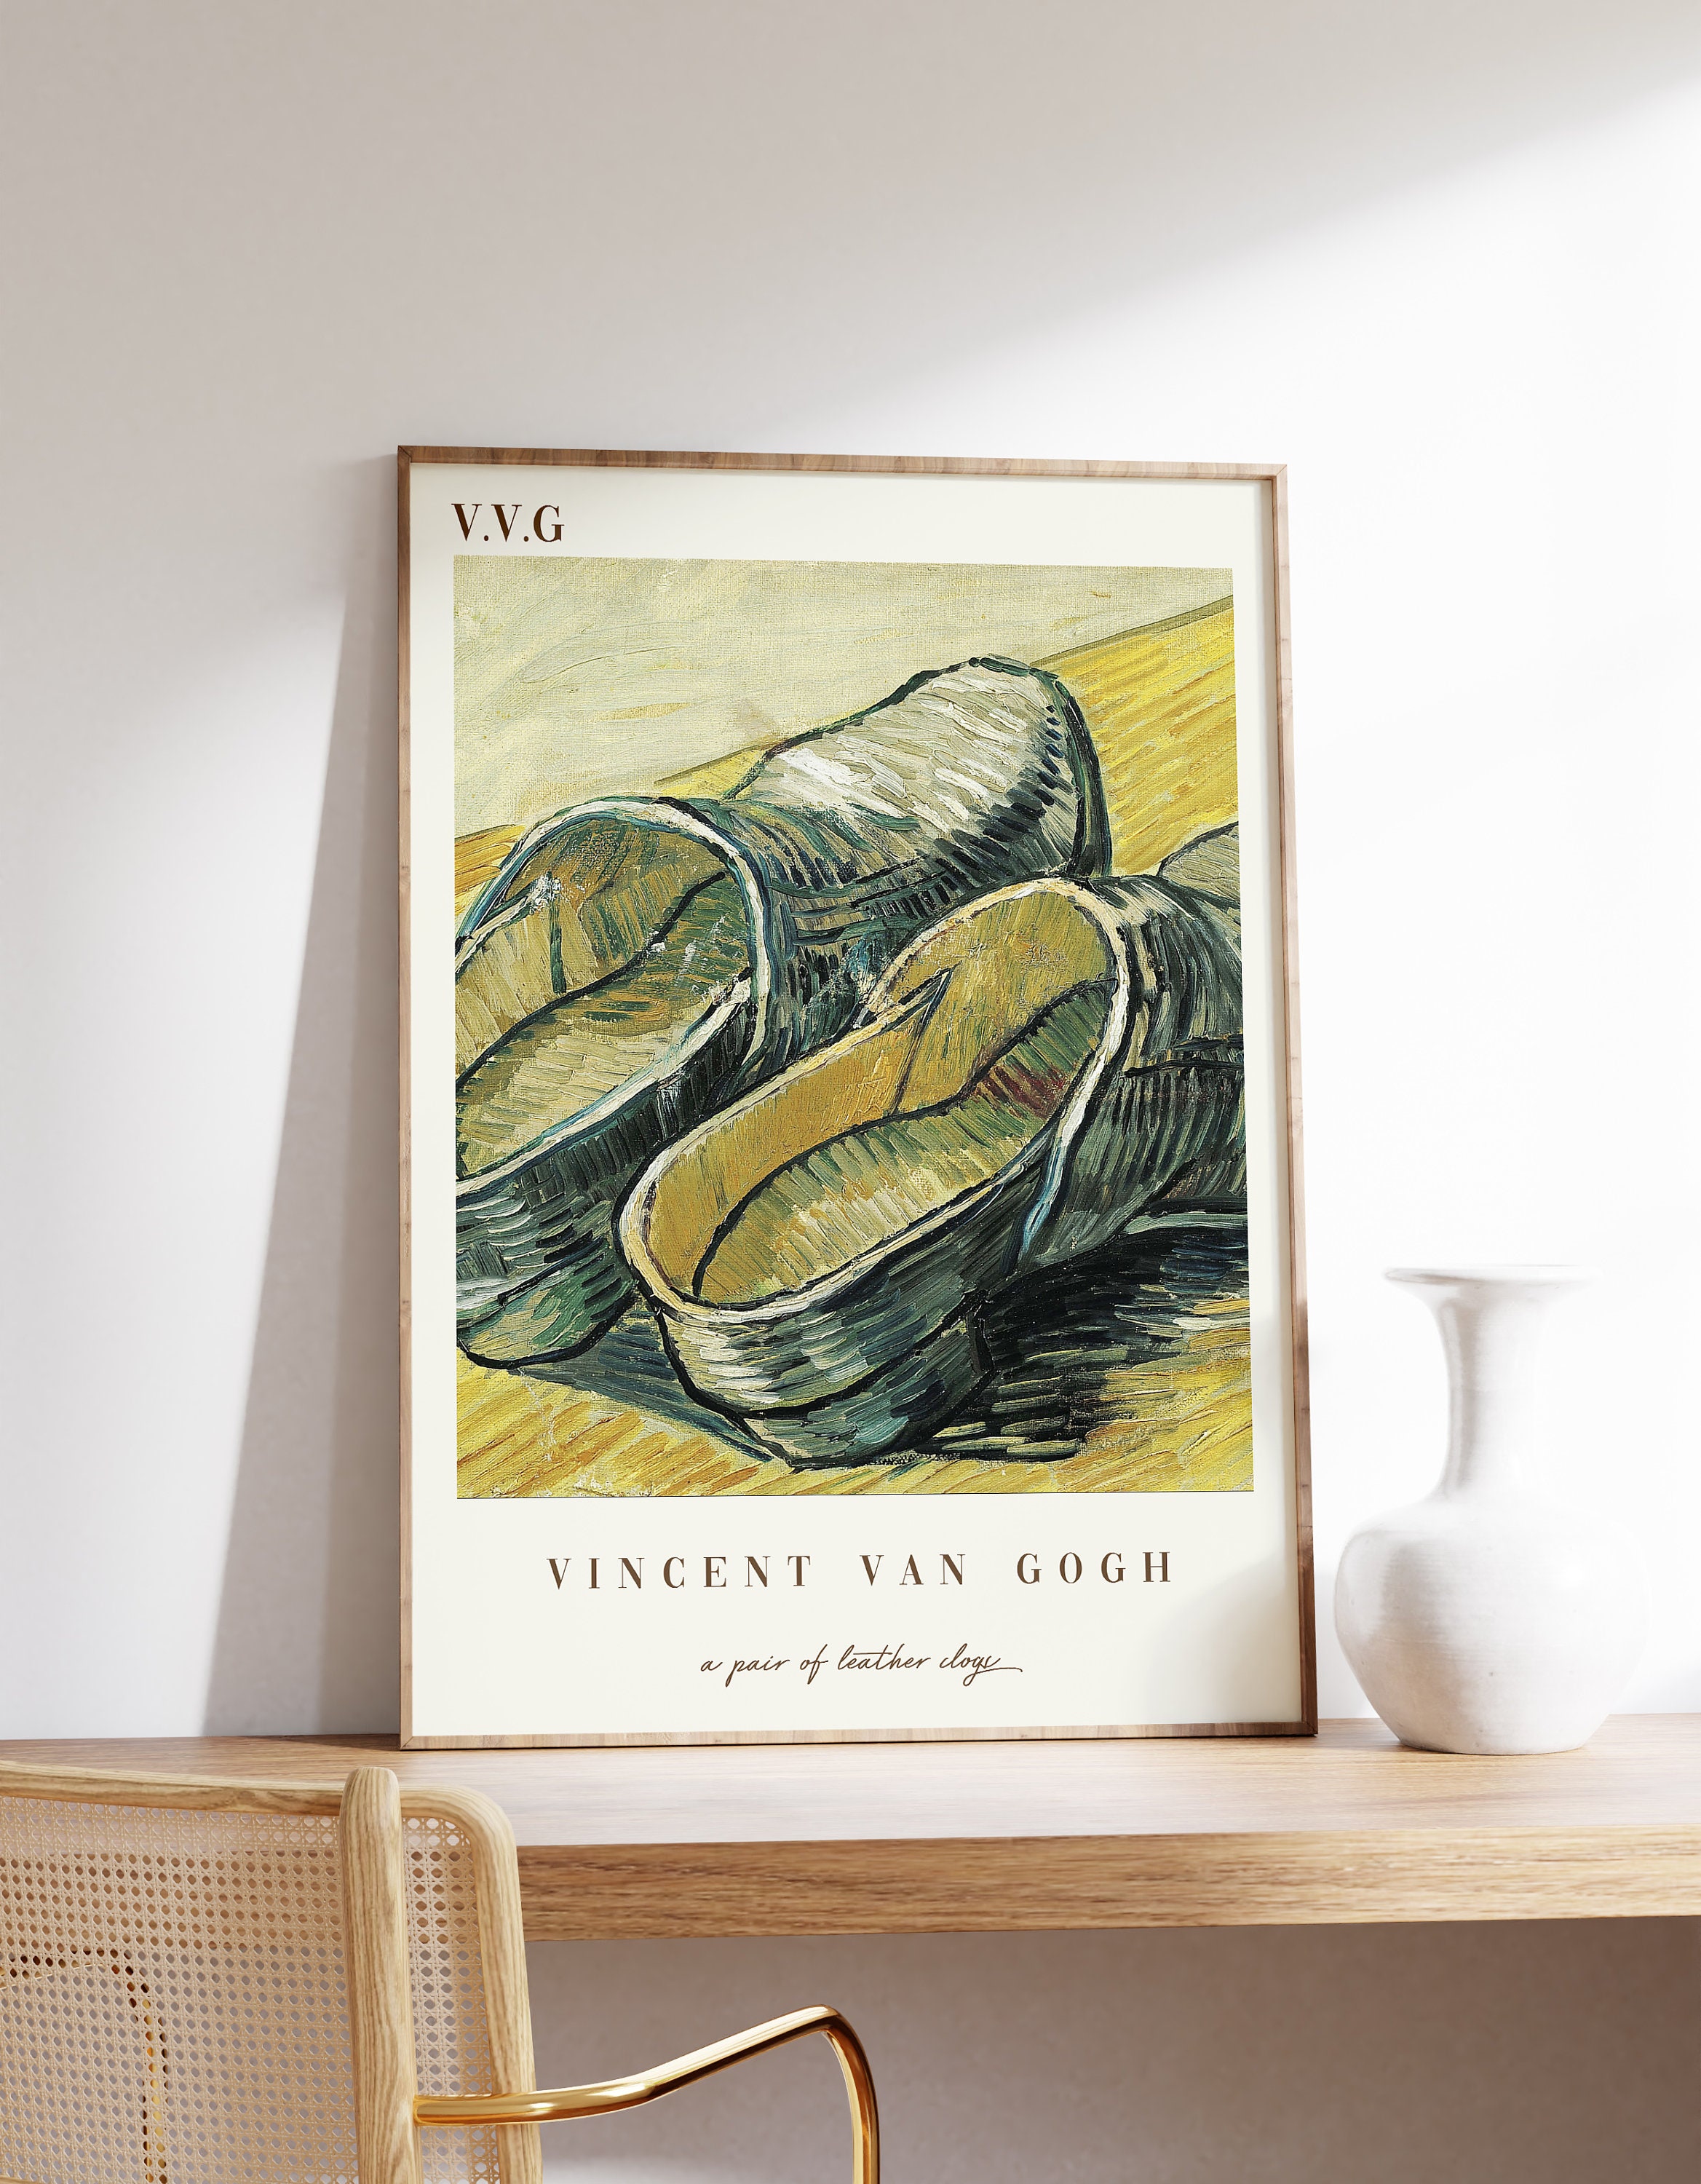 Vincent van Gogh - A Pair of Leather Clogs - Van Gogh Museum